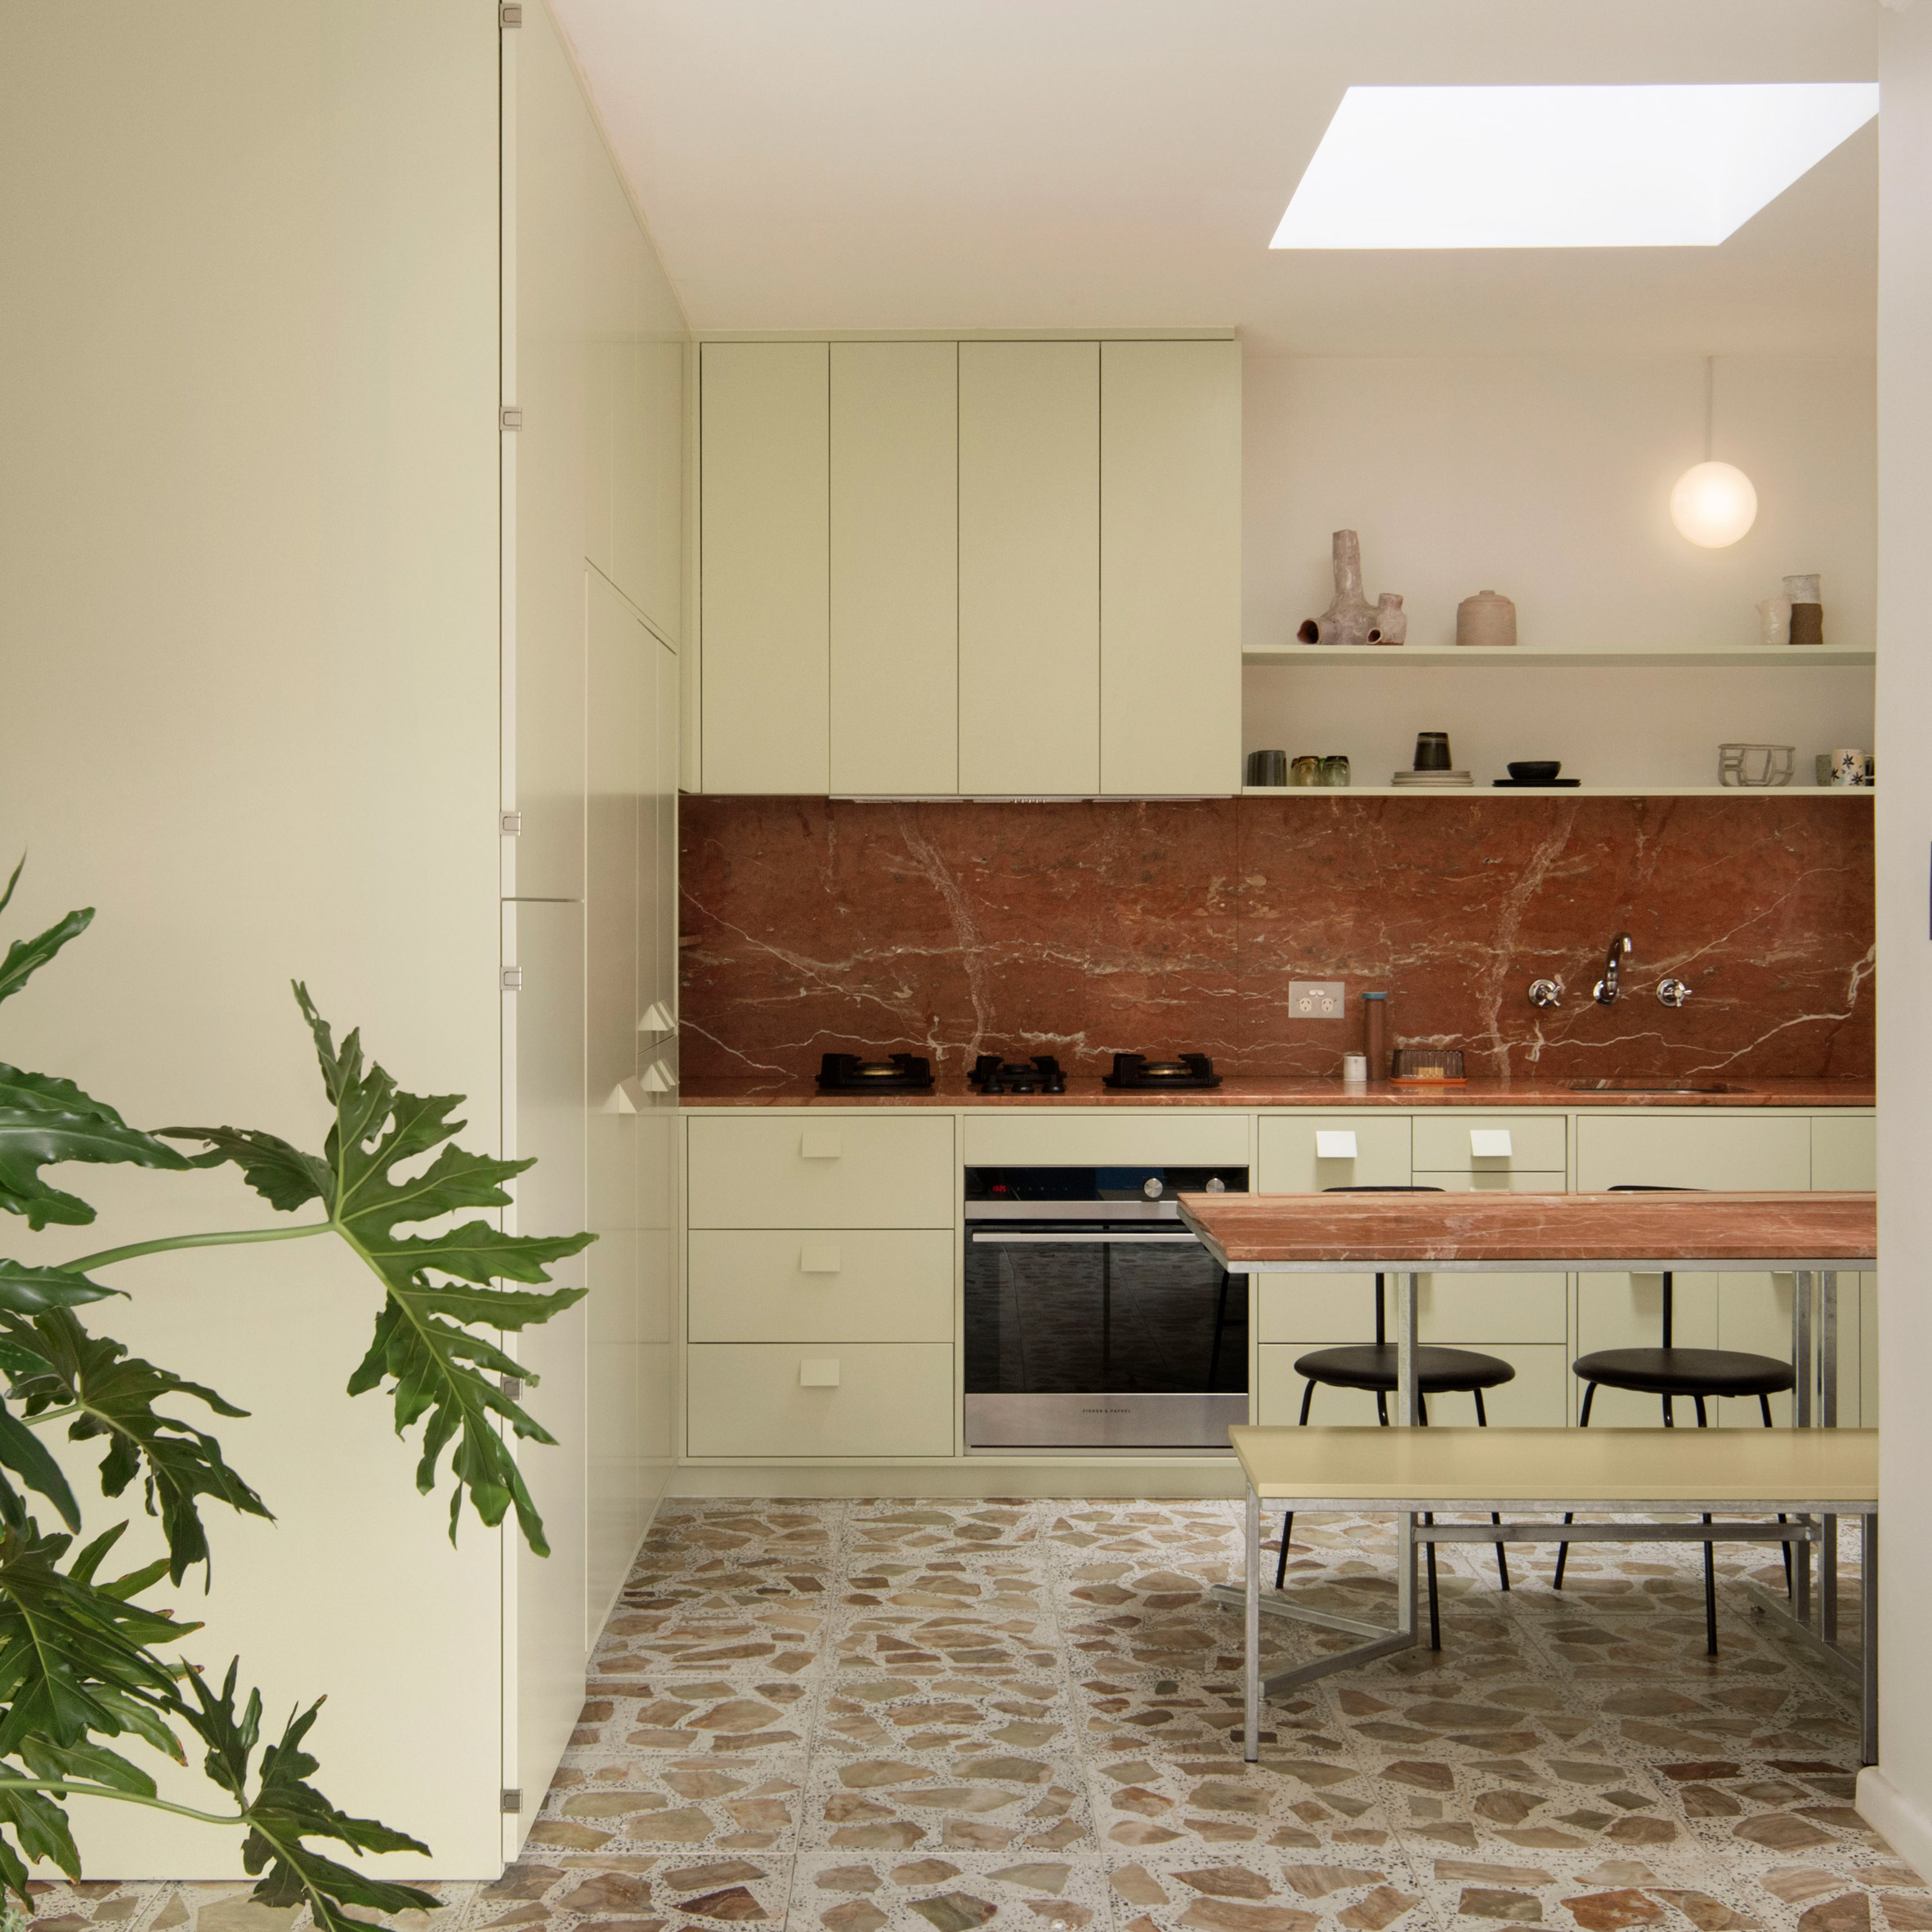 Pistachio green kitchen and terrazzo tiles update 20s Brunswick ...